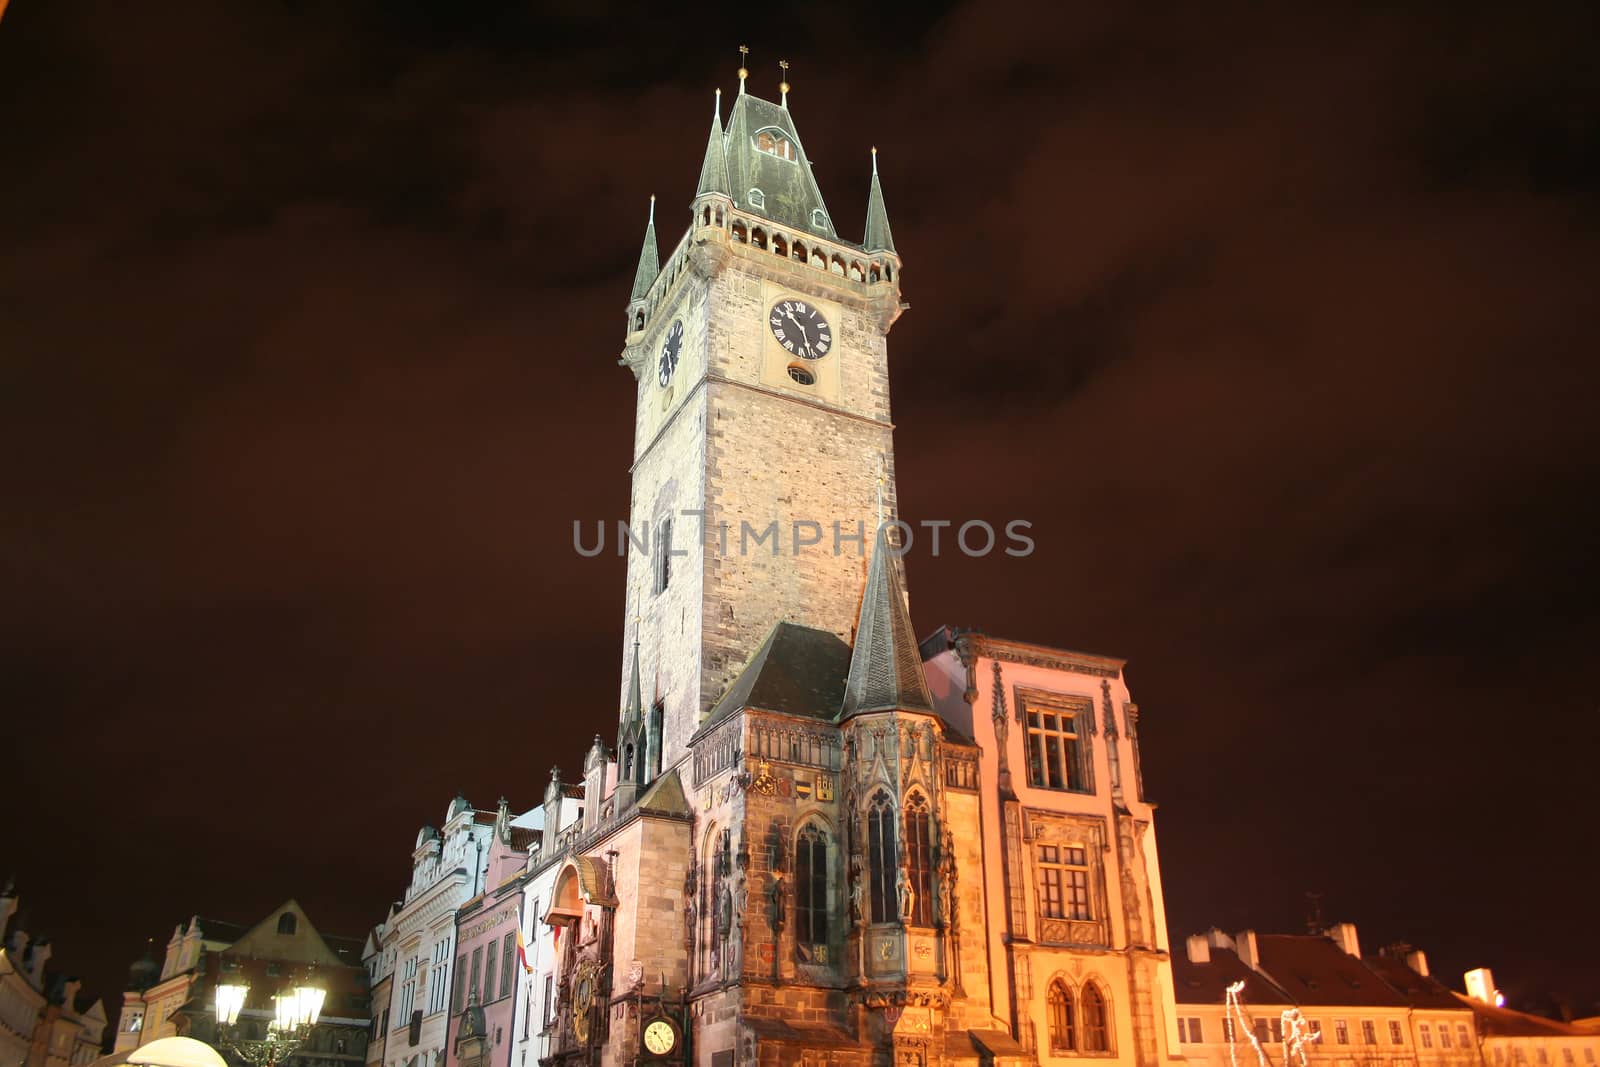 Evening illumination of Tower Orloj  in the city of Prague